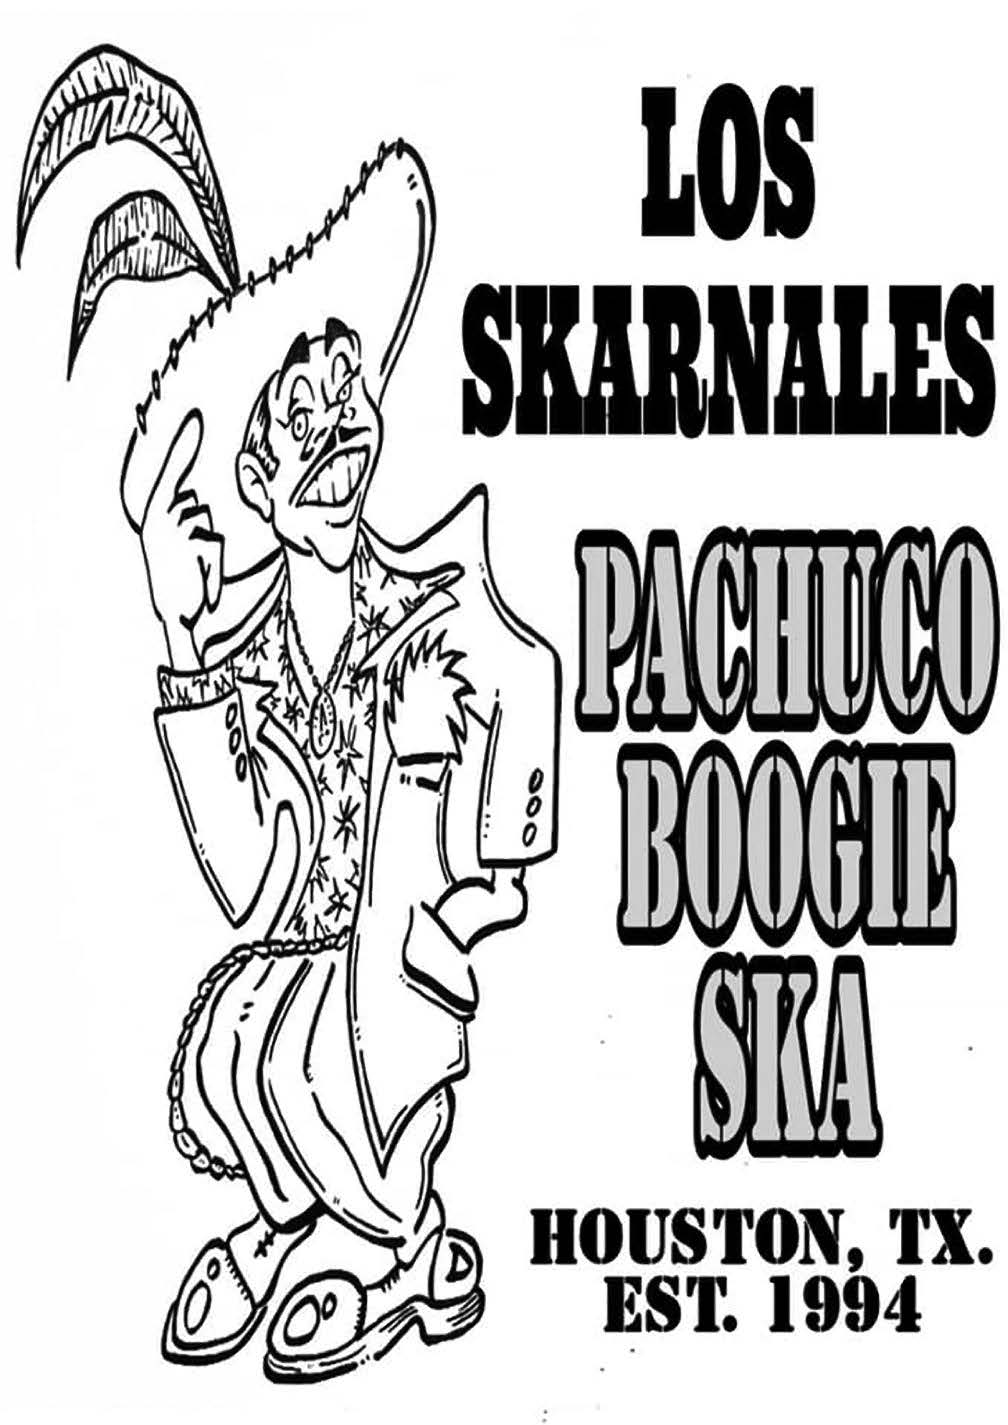 Pachuco zoot suit image